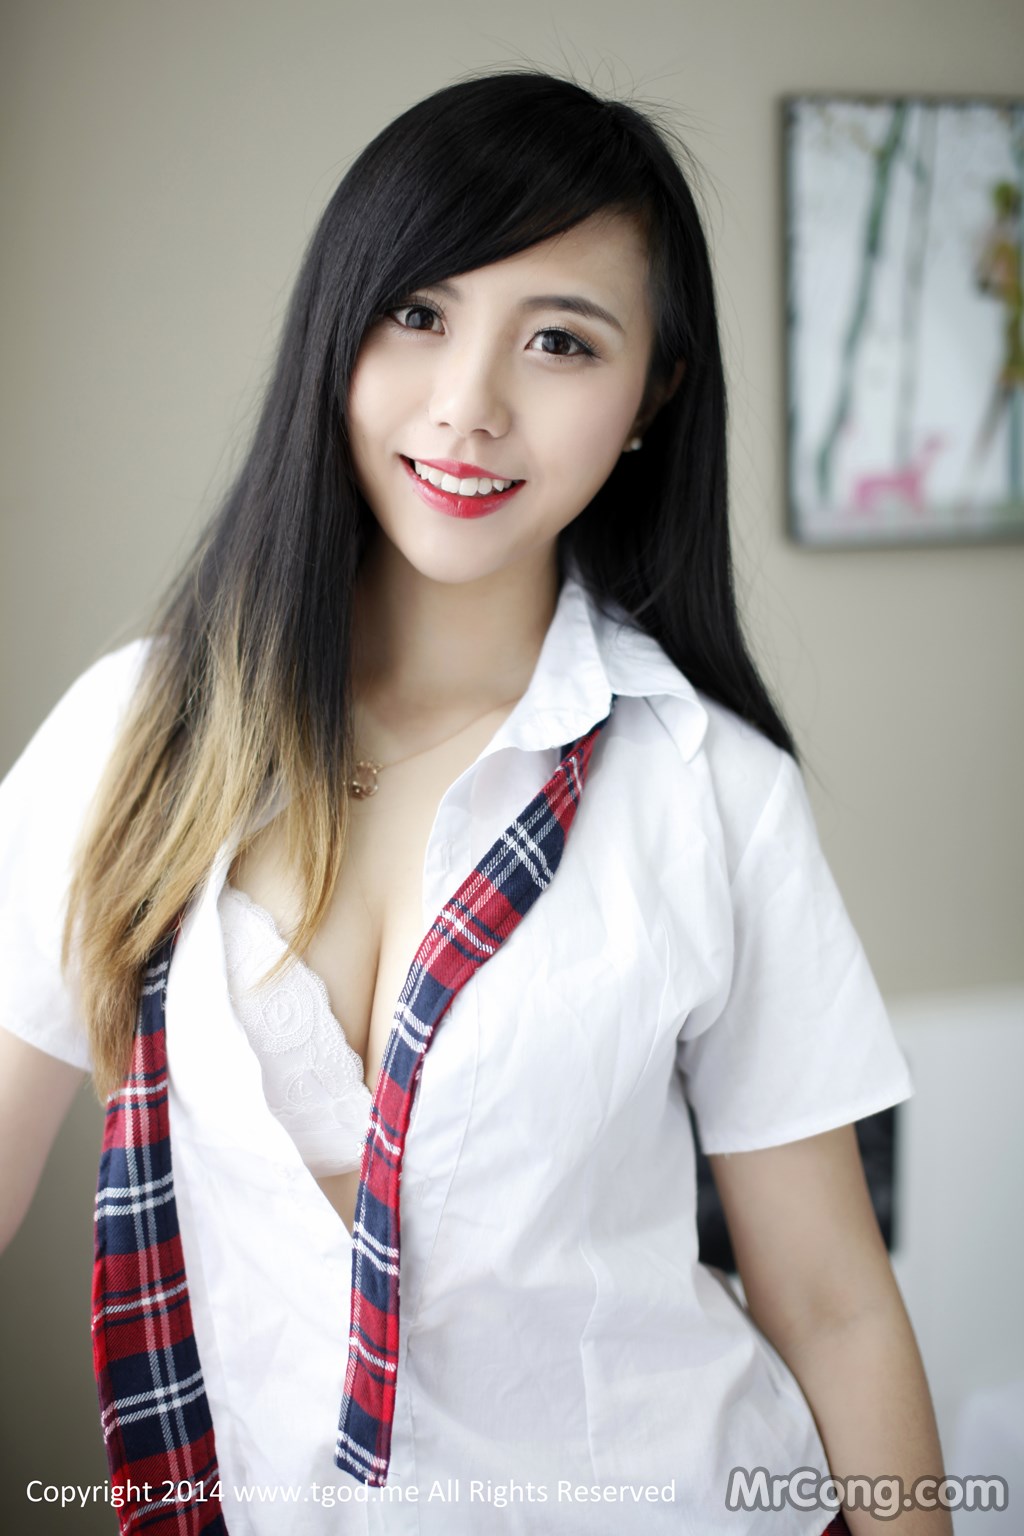 TGOD 2014-12-23: Model Xie Chen Zhuo (谢忱 倬) (134 photos)